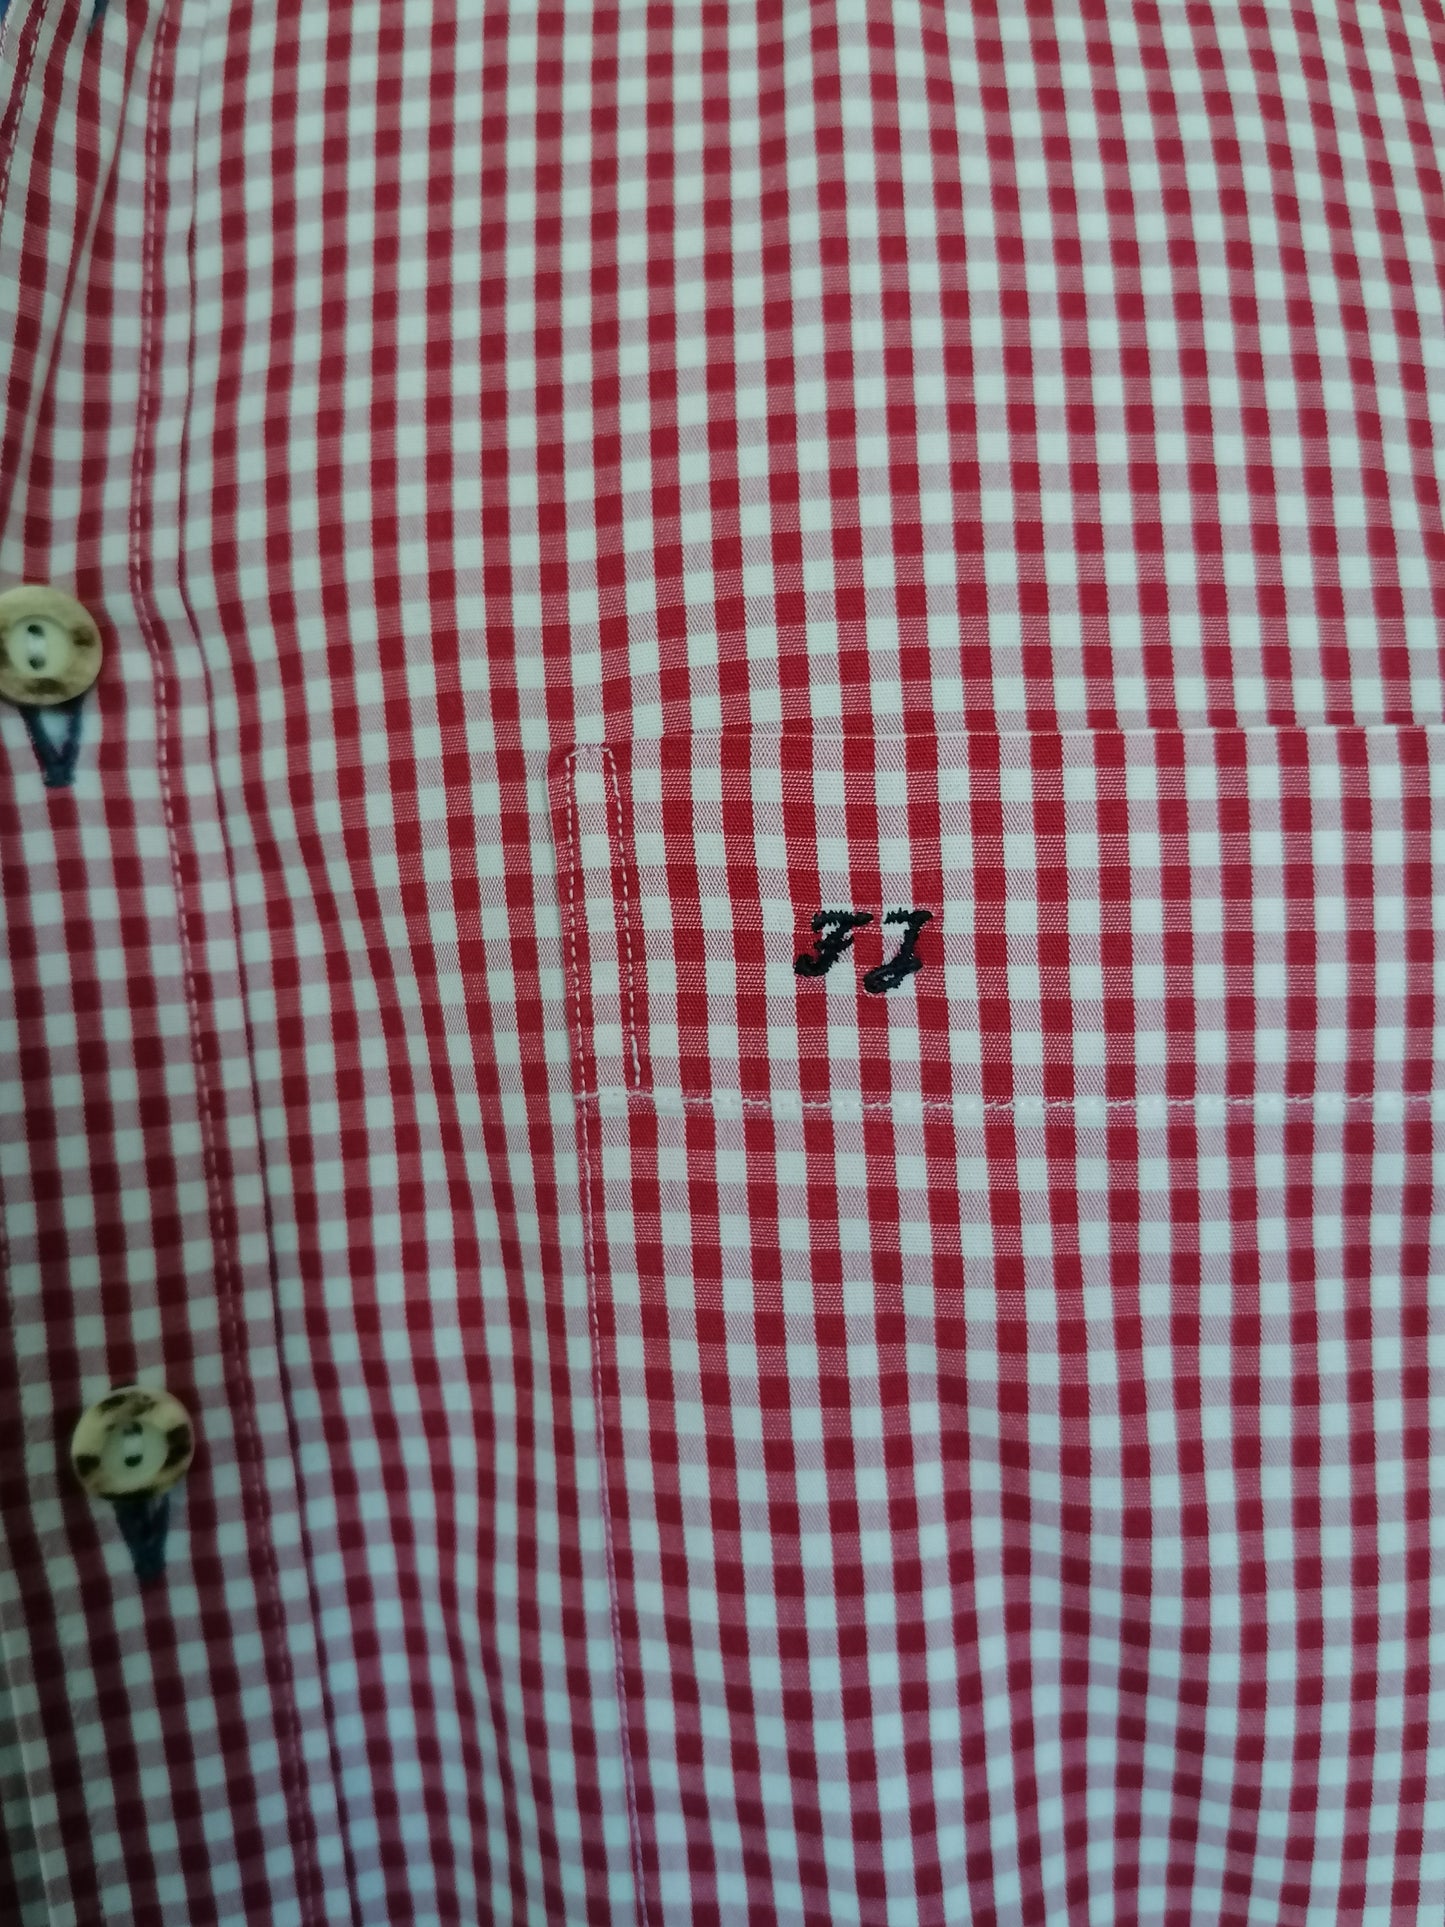 Müller Maßmanufaktur shirt. Red white checkered. Size XL. "FJ"